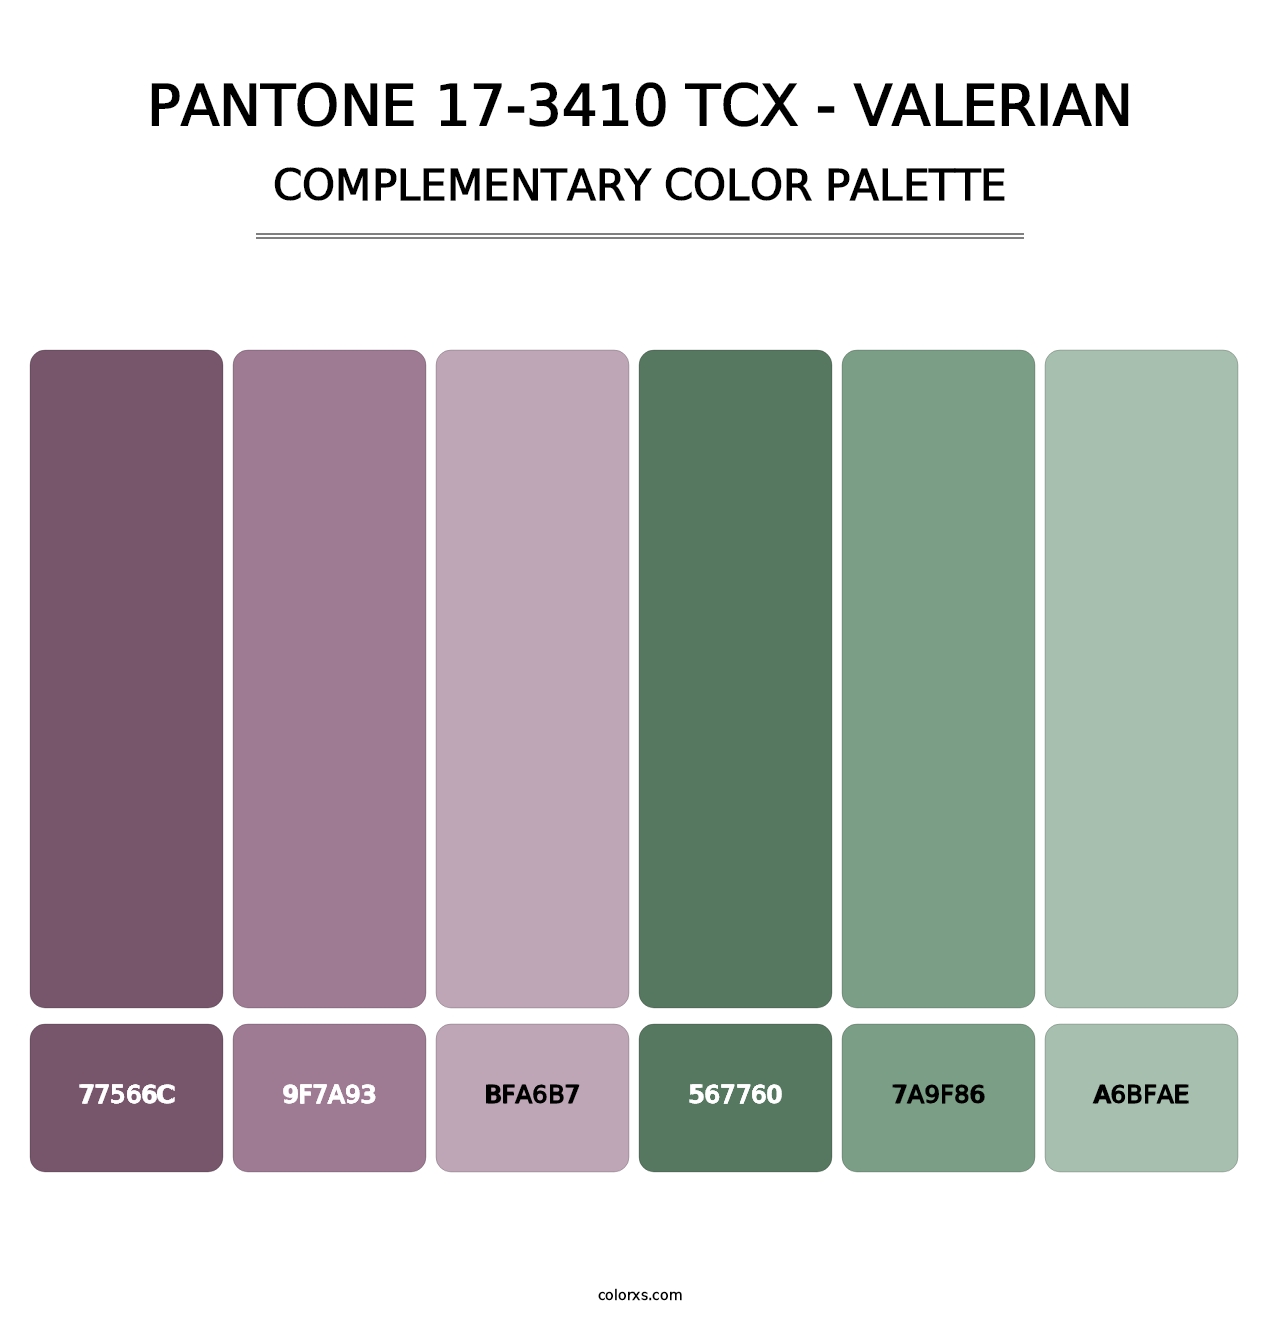 PANTONE 17-3410 TCX - Valerian - Complementary Color Palette